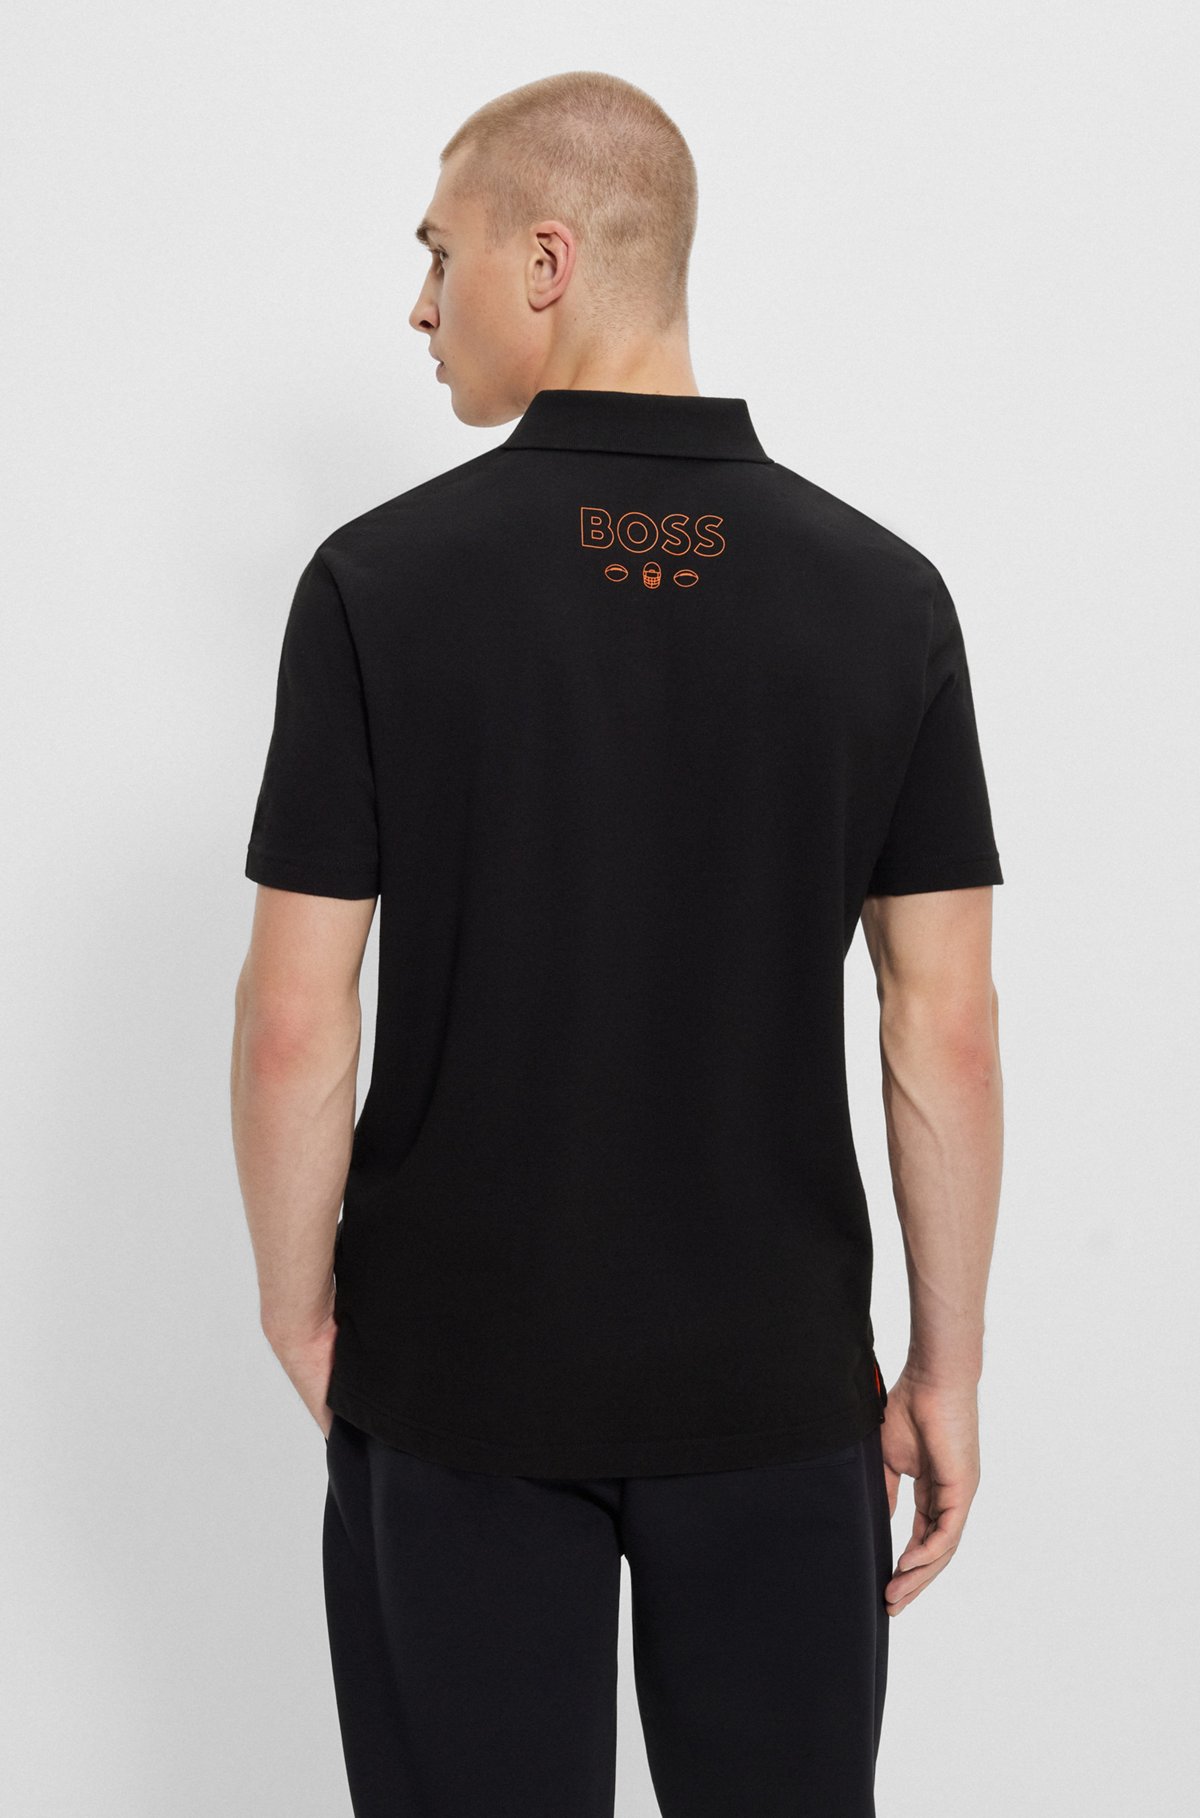 BOSS x NFL cotton-piqué polo shirt with collaborative branding, Bengals